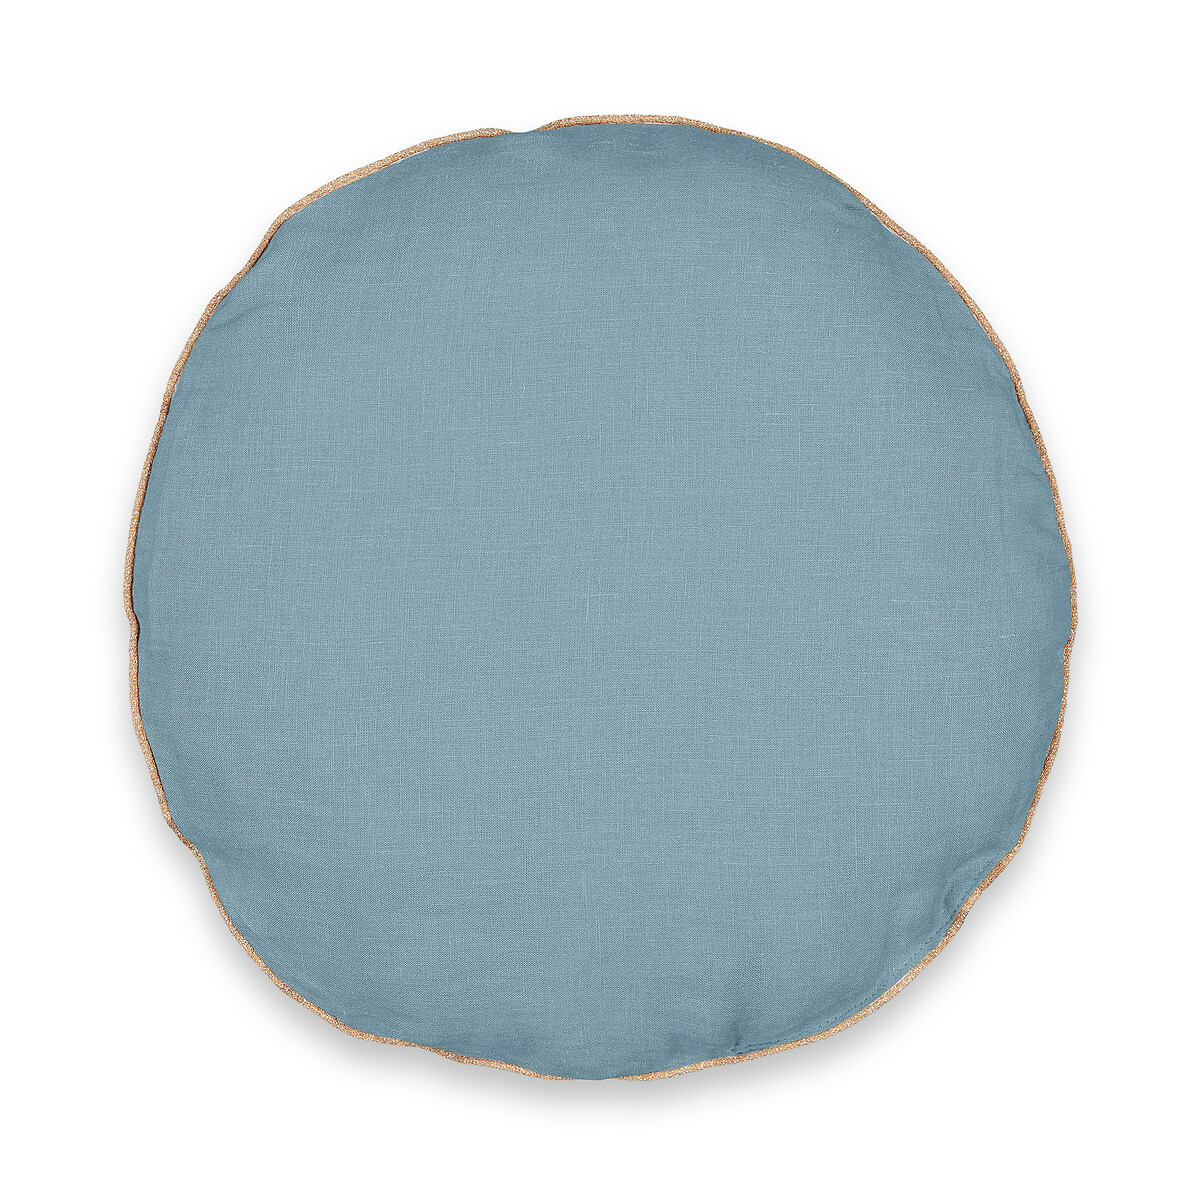 Подушка LaRedoute Круглая из стираного льна Onega диаметр 40 см синий, размер диаметр 40 см